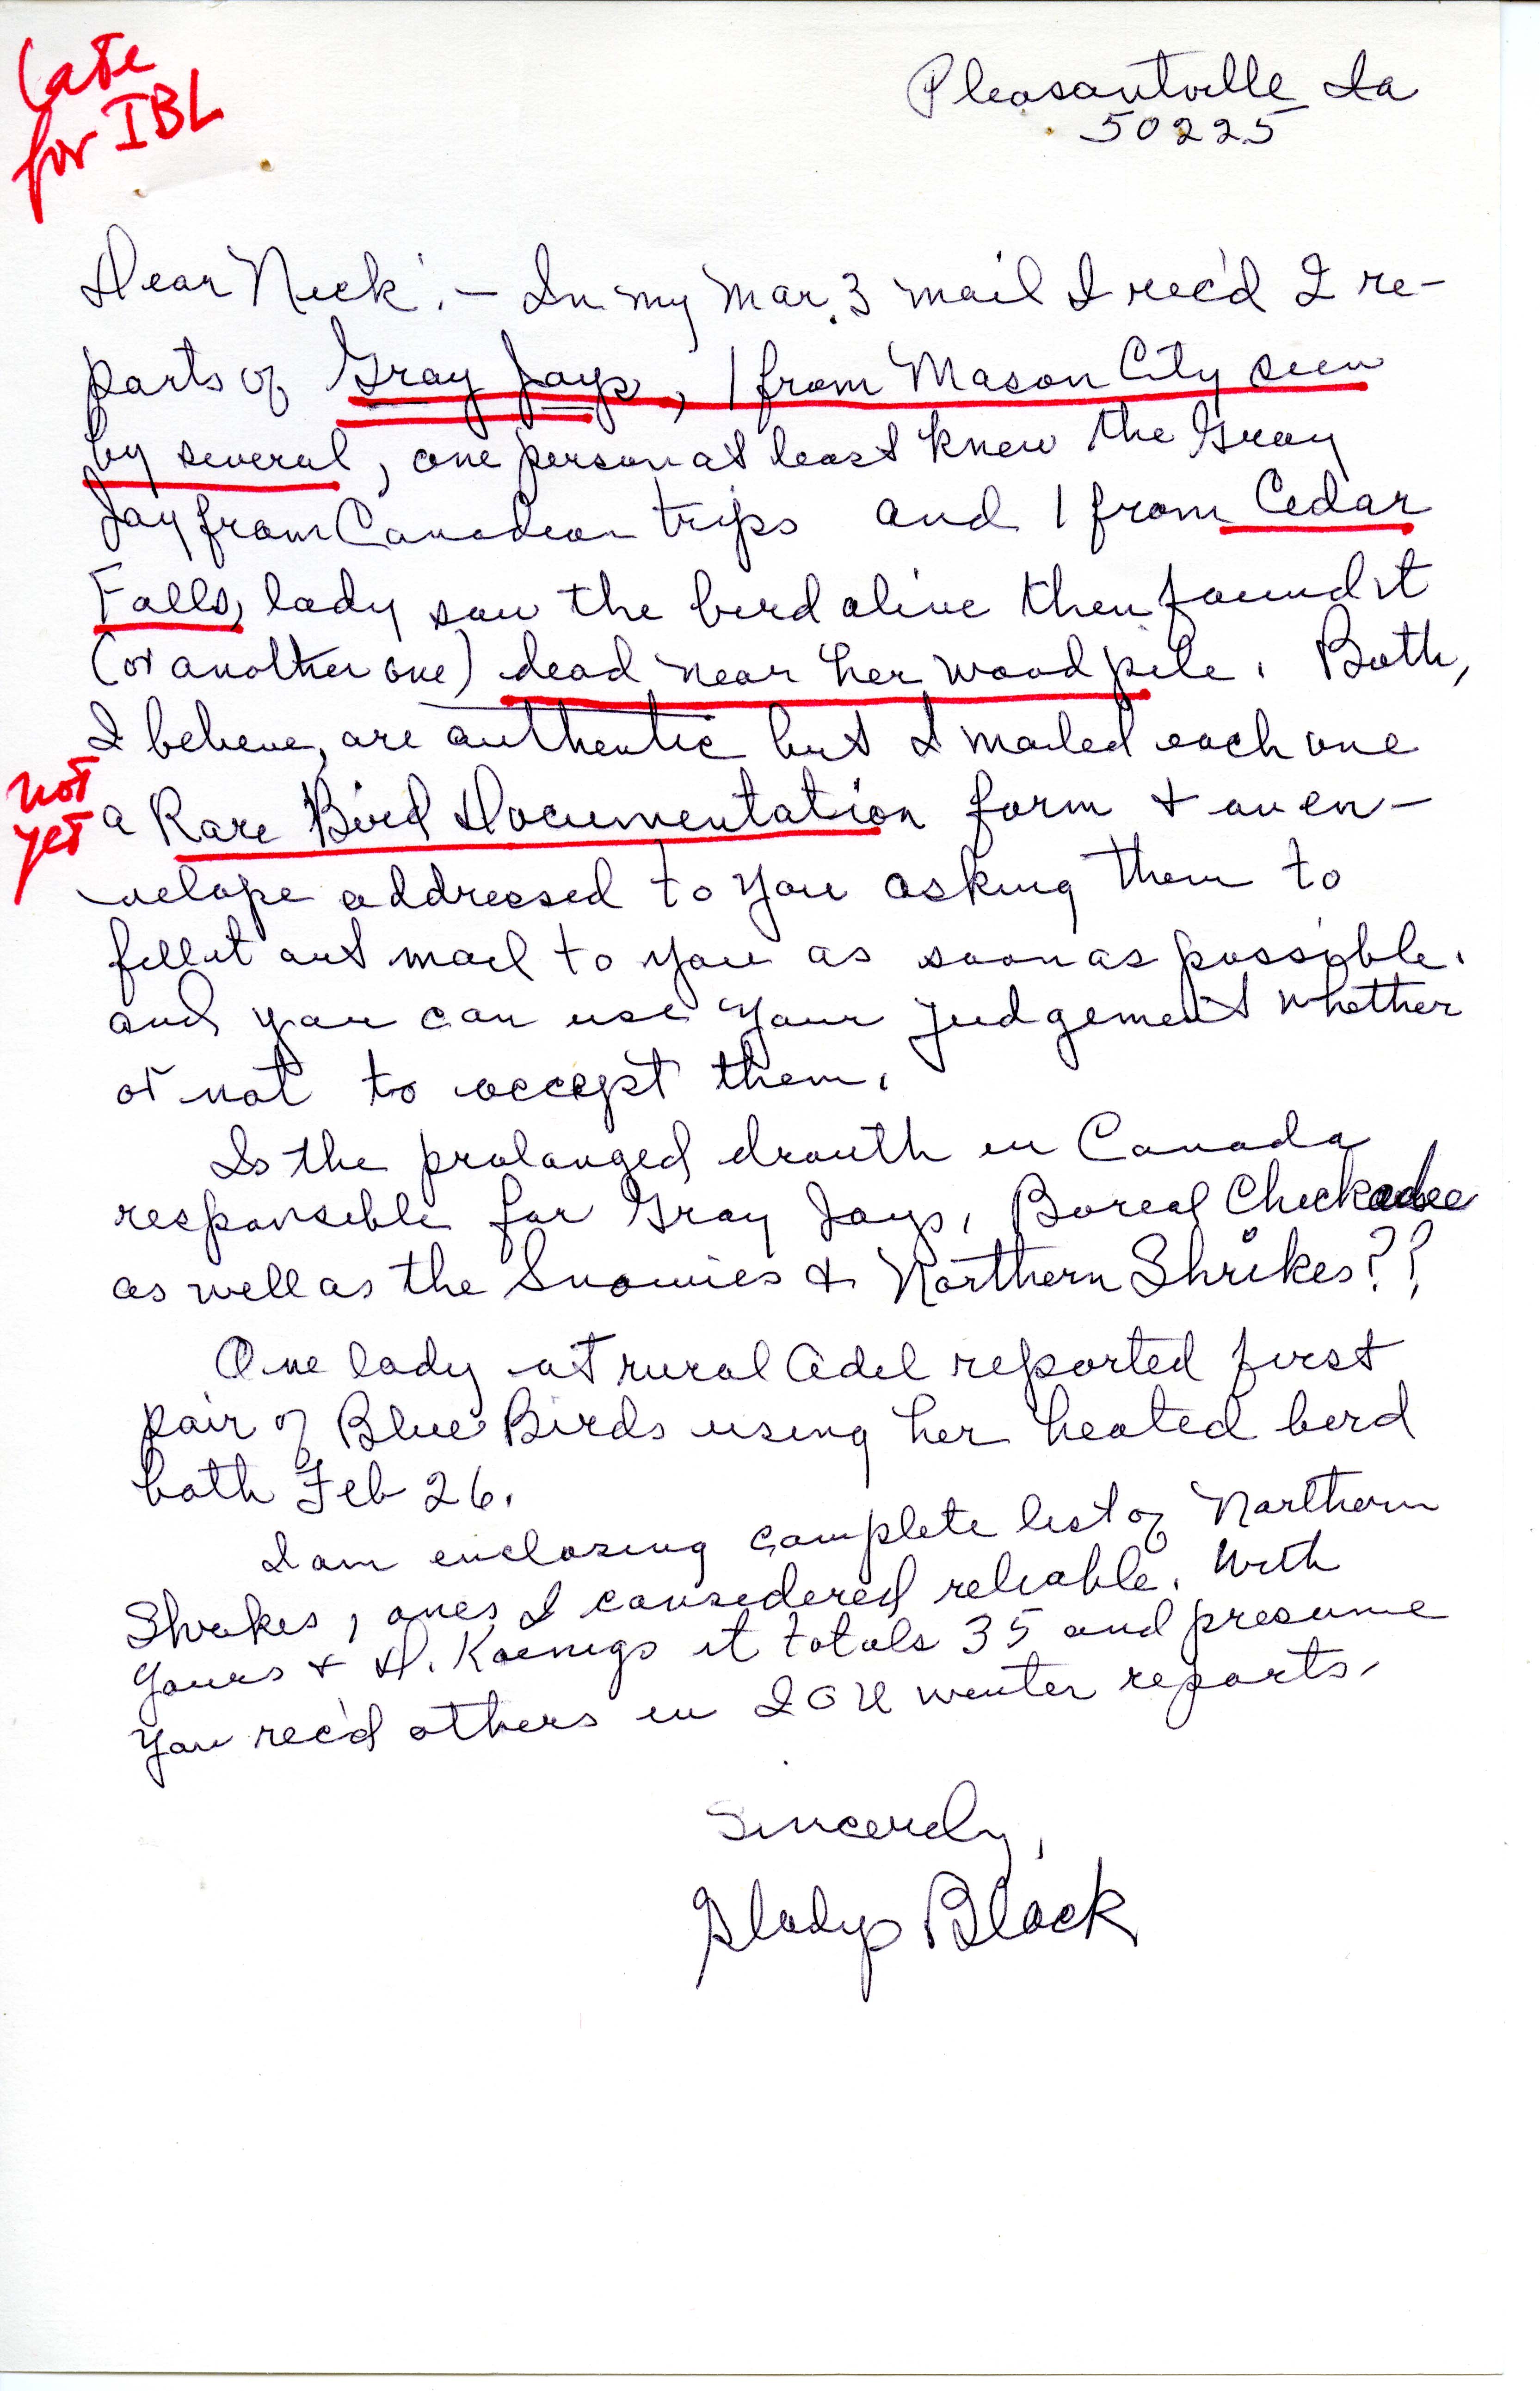 Gladys Black letter to Nicholas S. Halmi regarding bird sightings and Iowa Northern Shrikes checklist, February 8, 1977